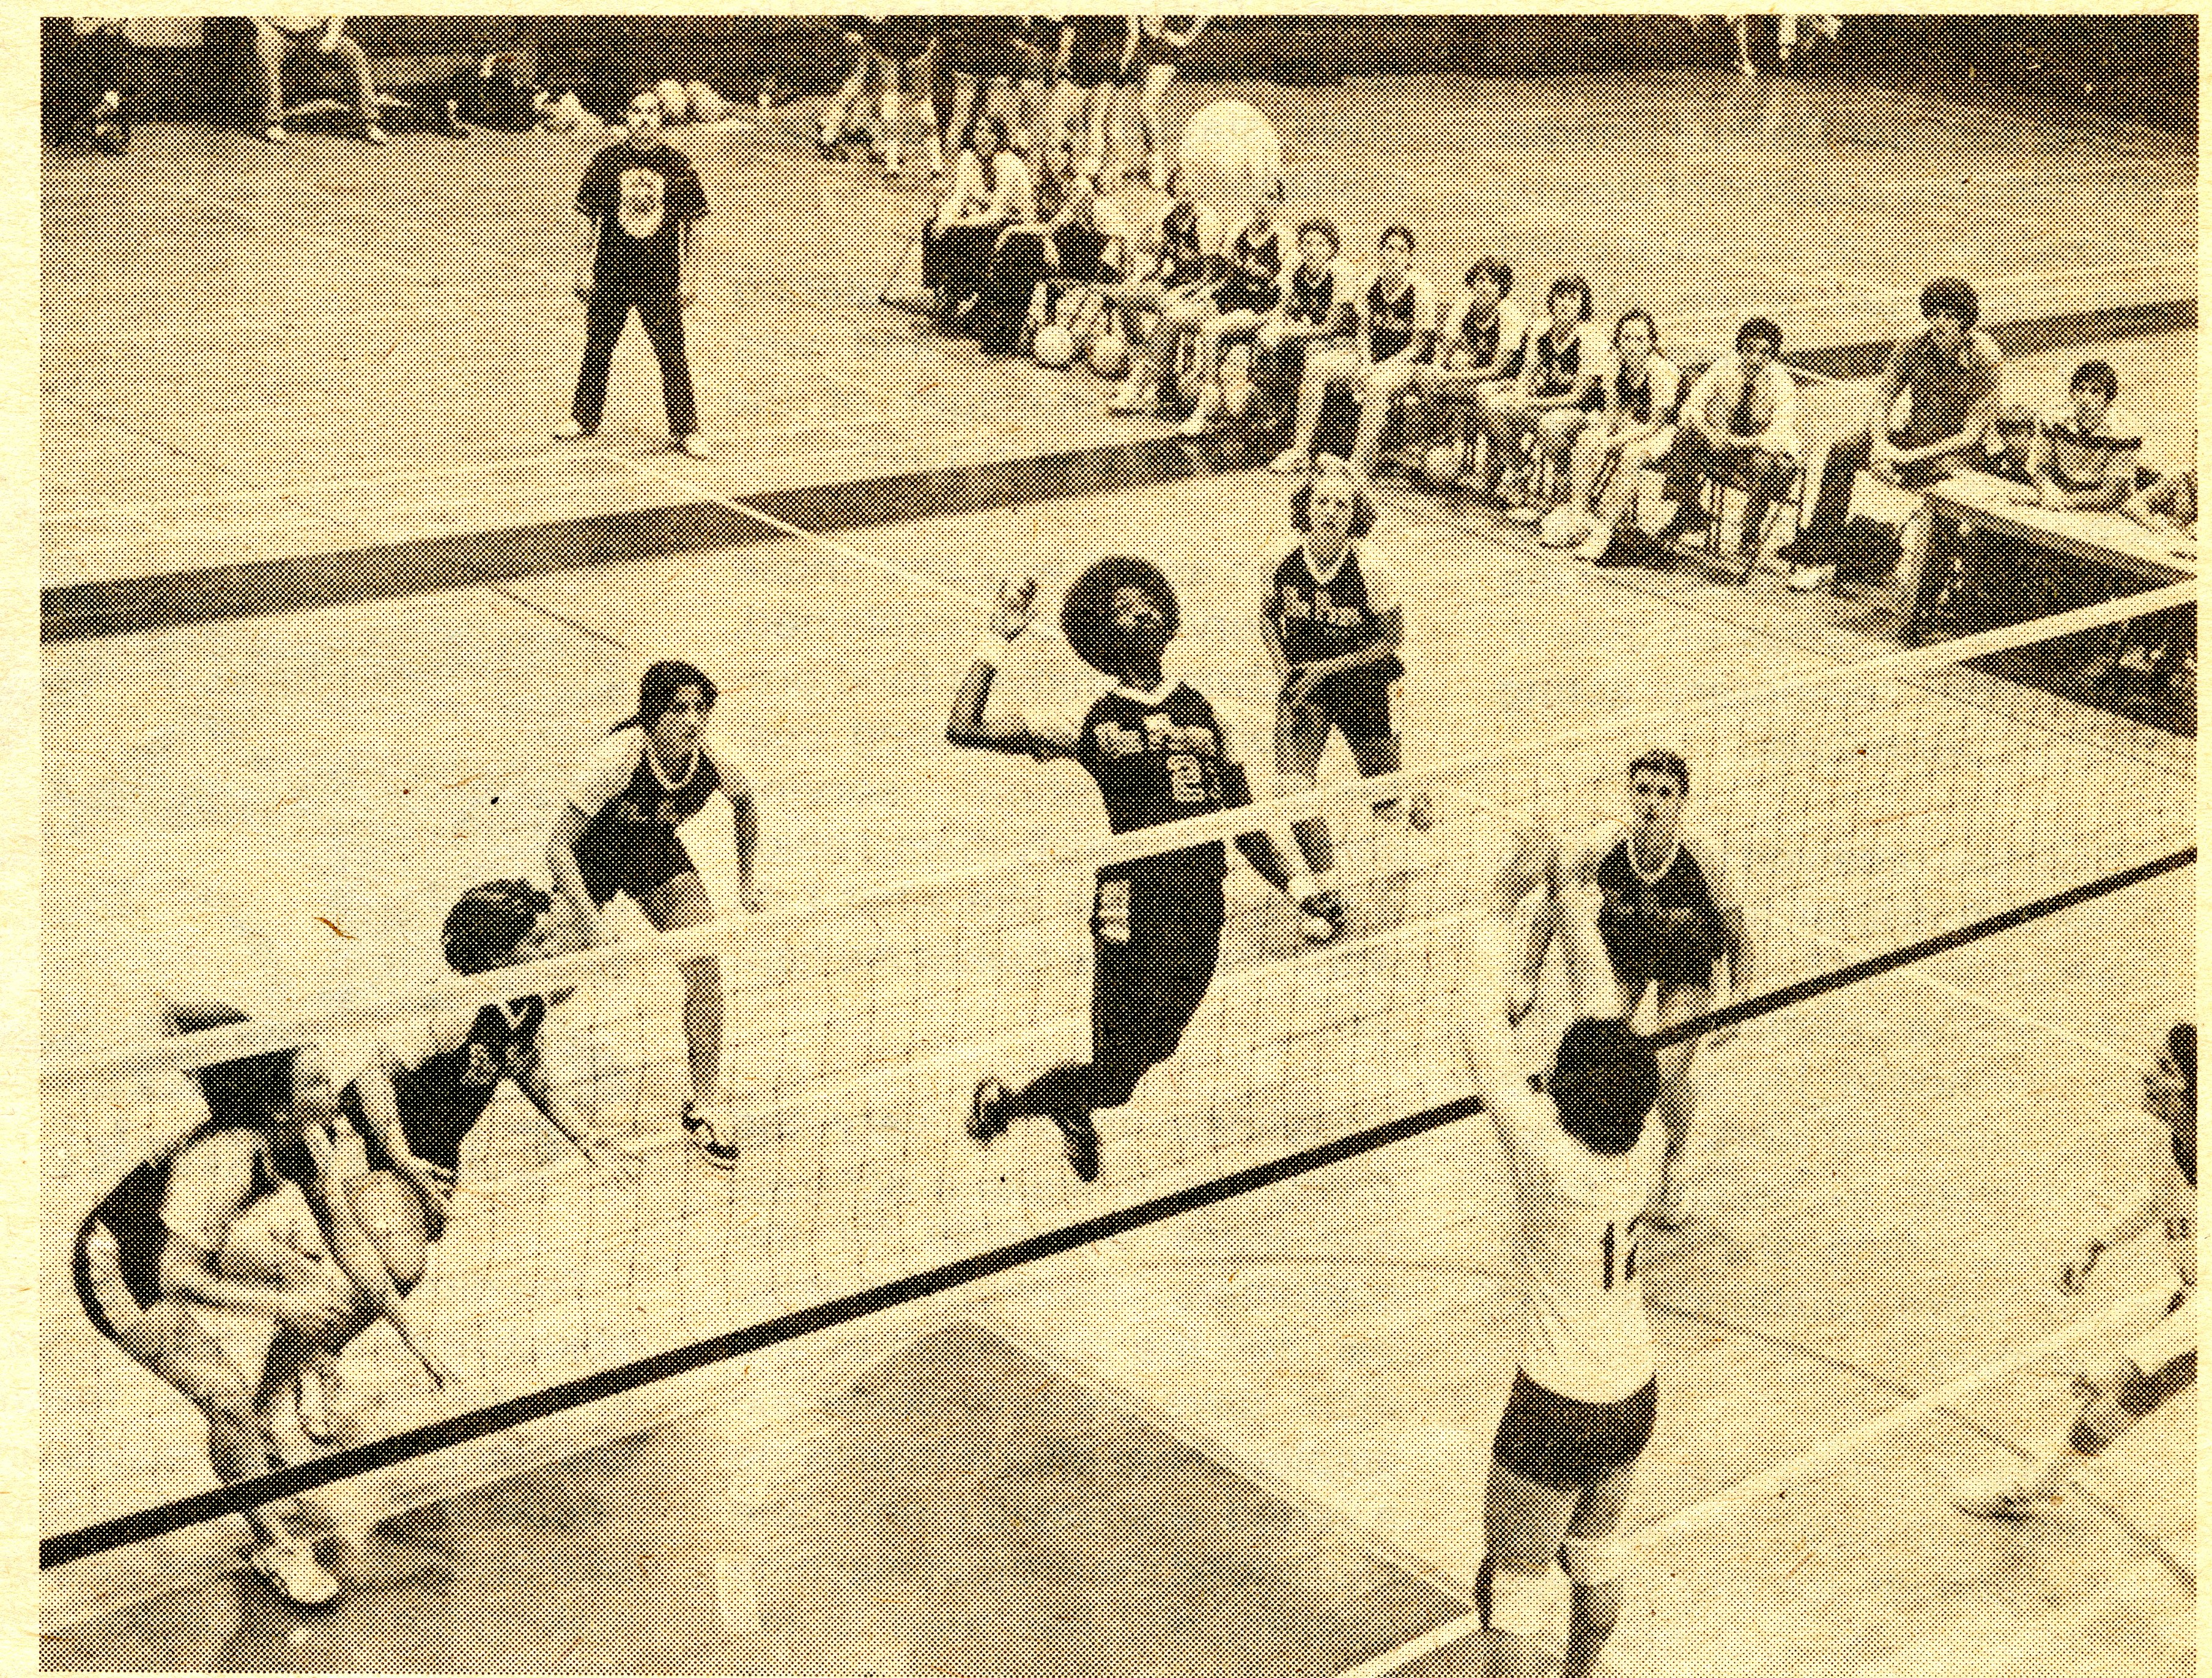 Lillie Goesman preparing to spike the ball, DePaulia October 1977